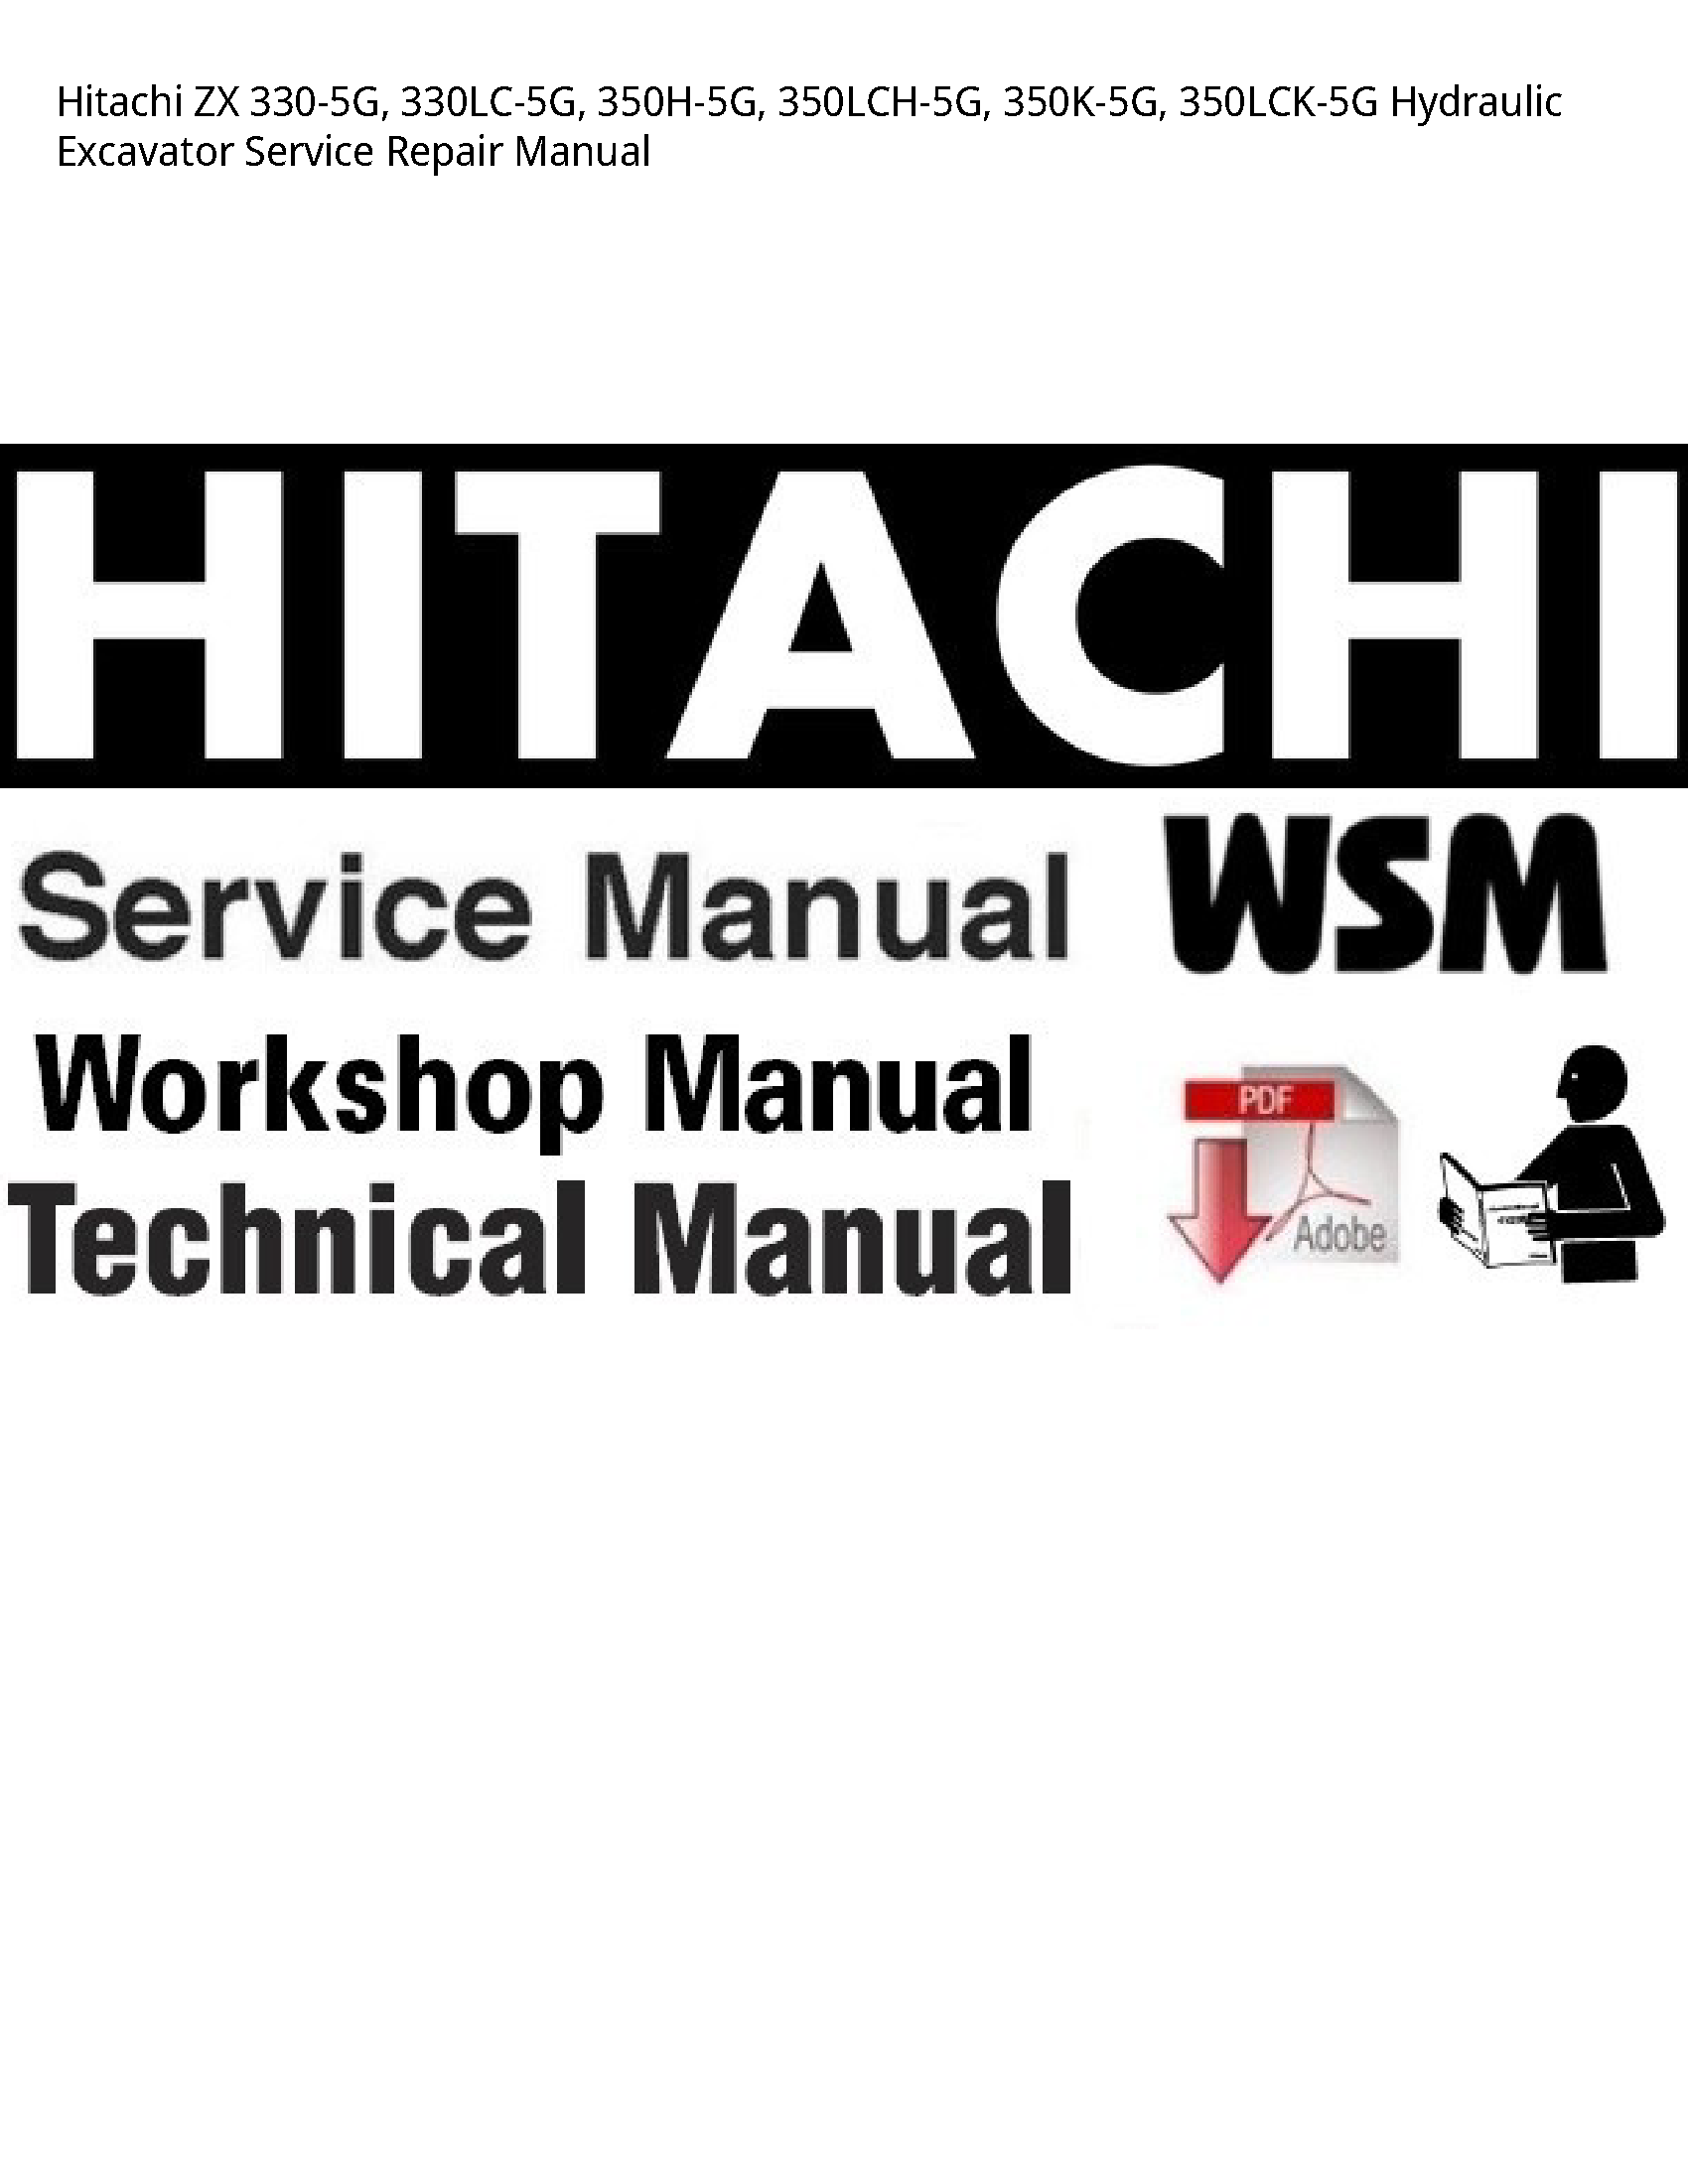 Hitachi 330-5G ZX Hydraulic Excavator manual